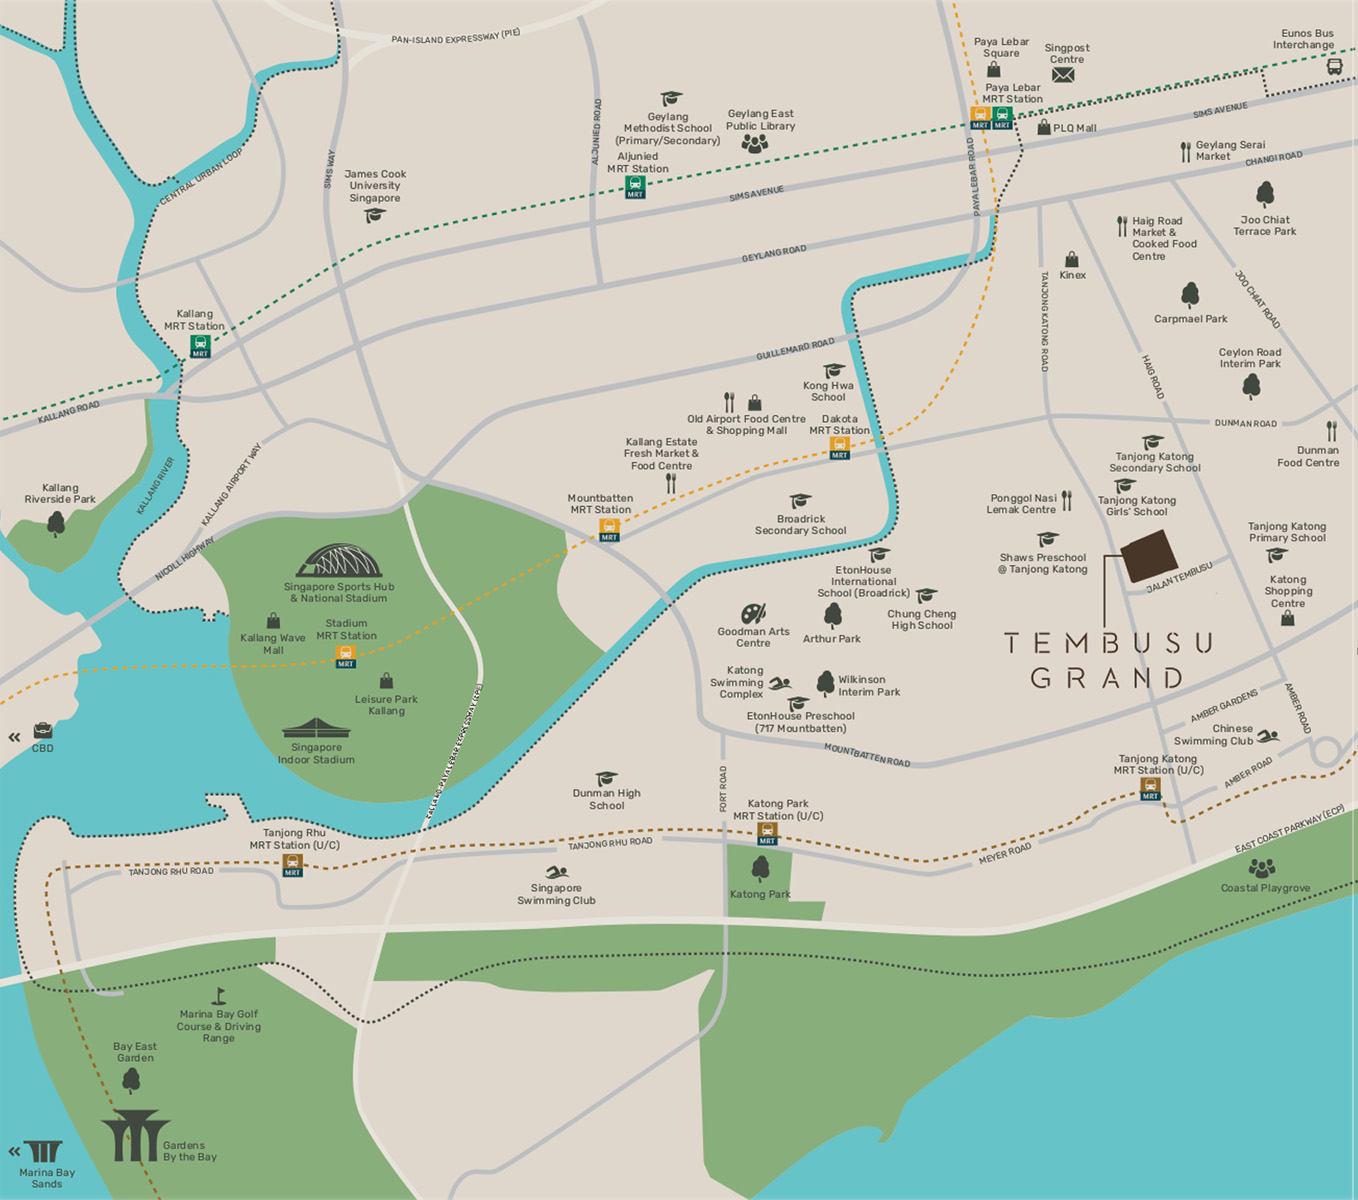 tembusu-grand-location-map